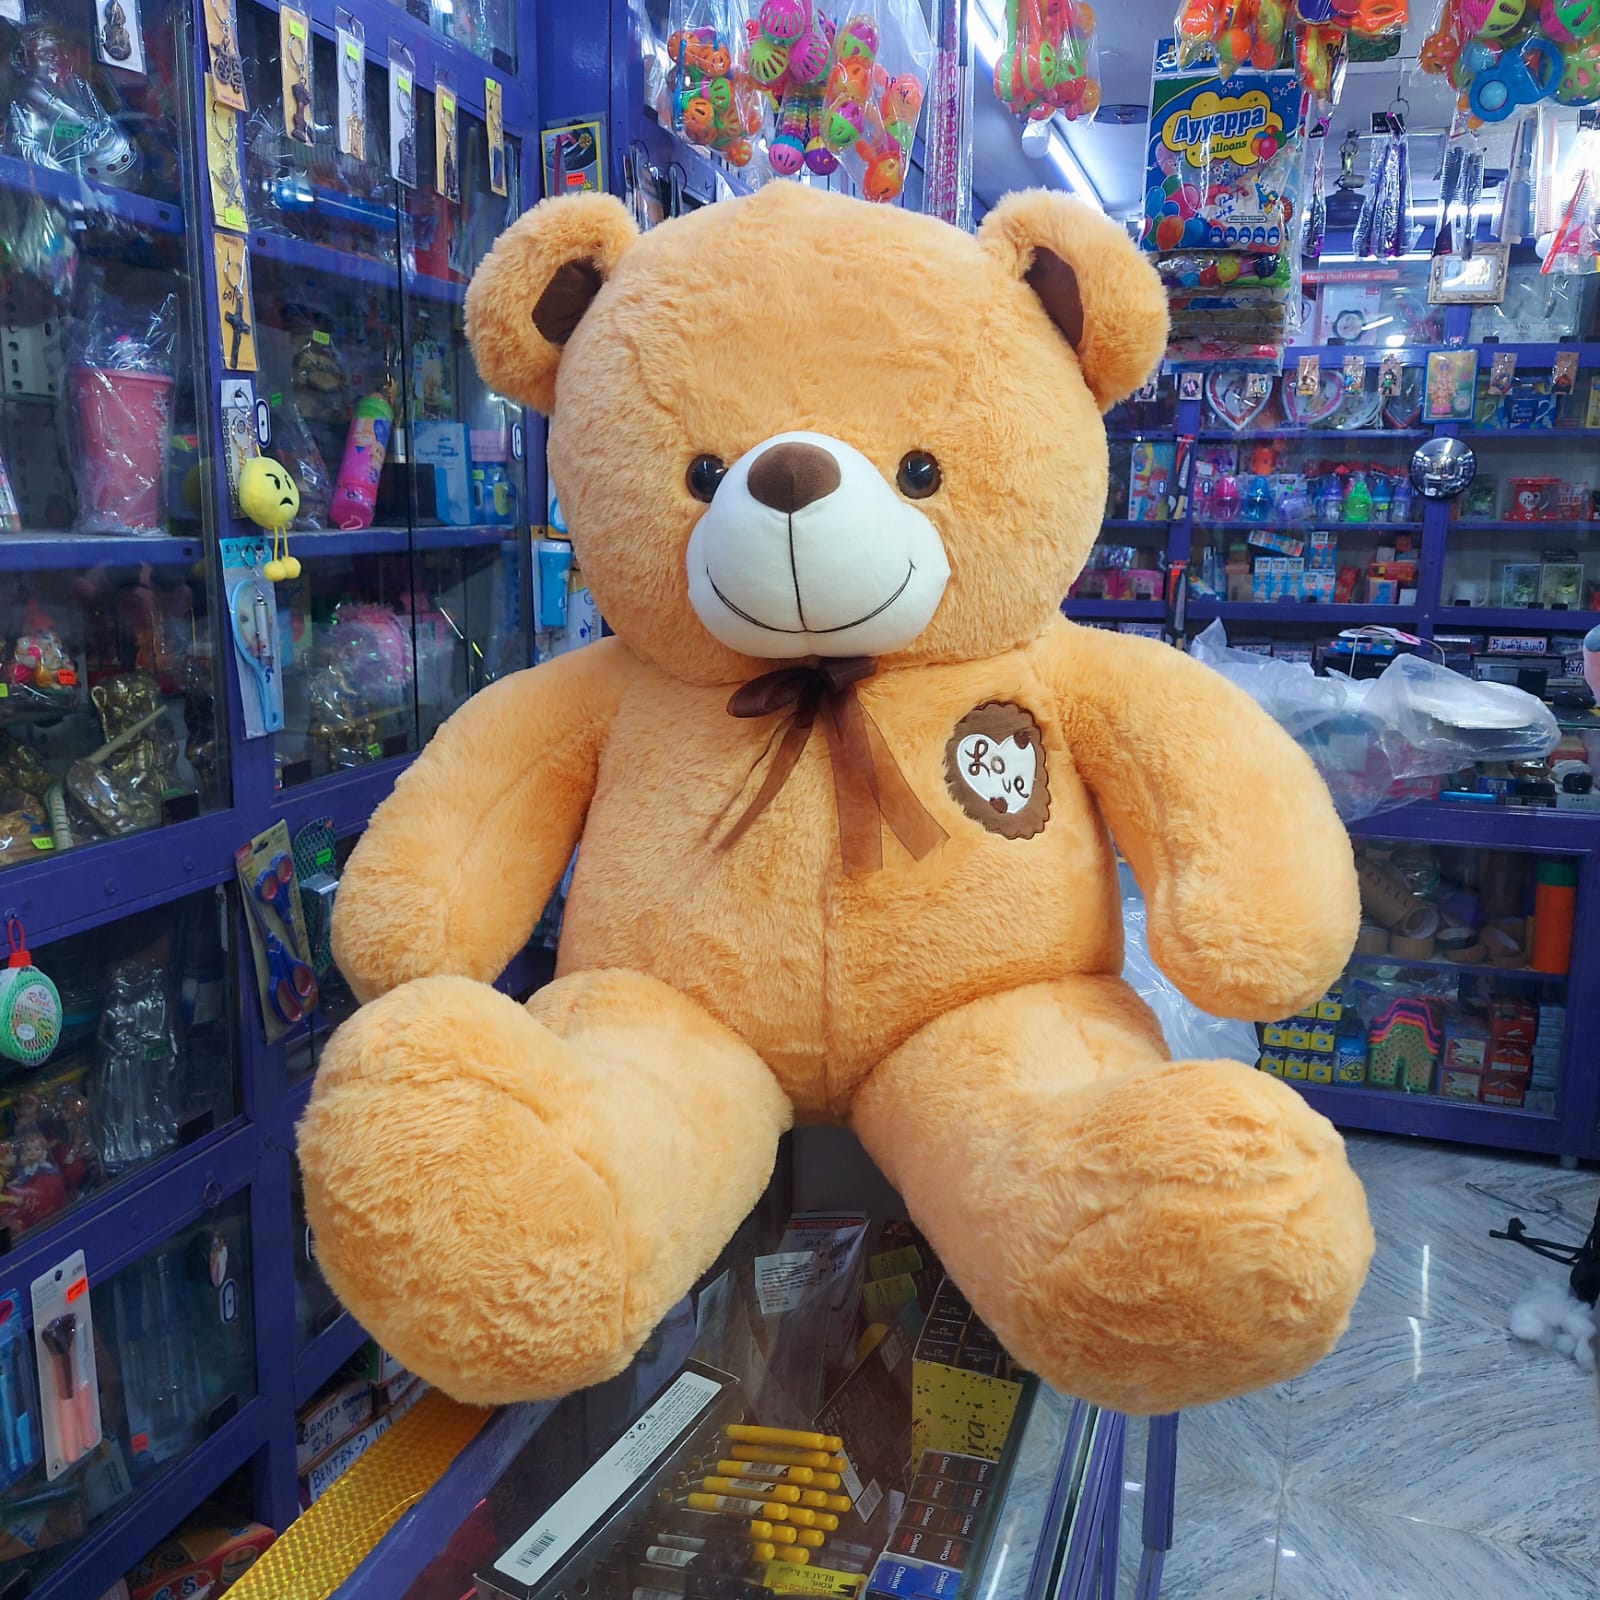 Buy 3 feet Teddy Bear doll at Best Price, Plush Soft Toy